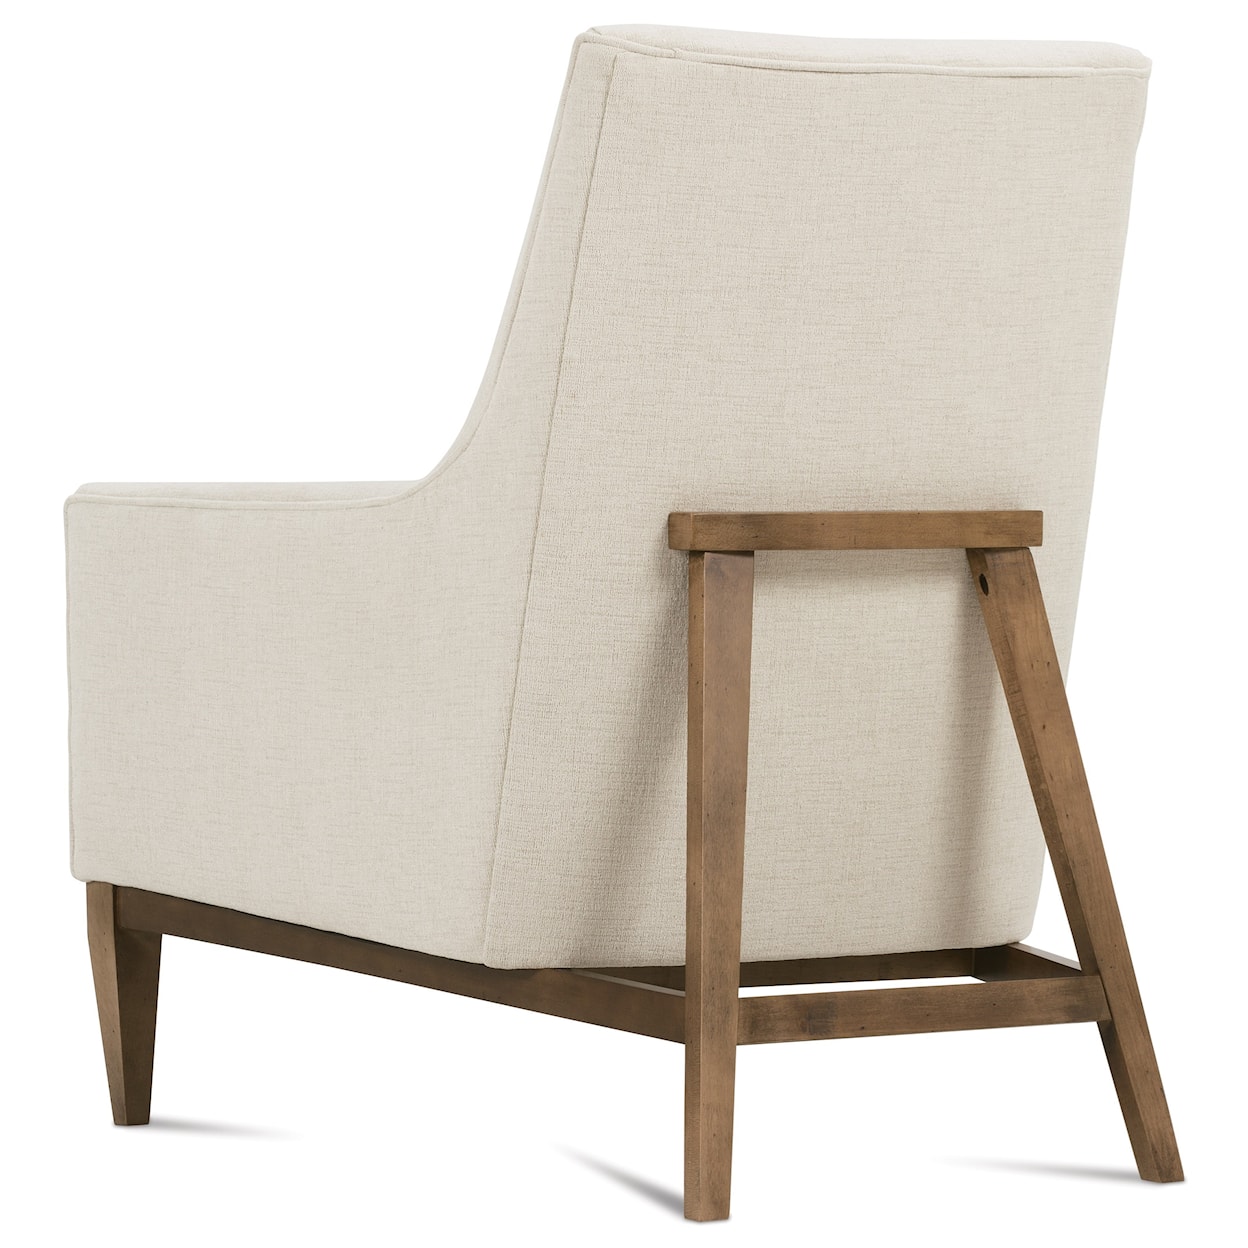 Rowe Thatcher Wood Frame Chair